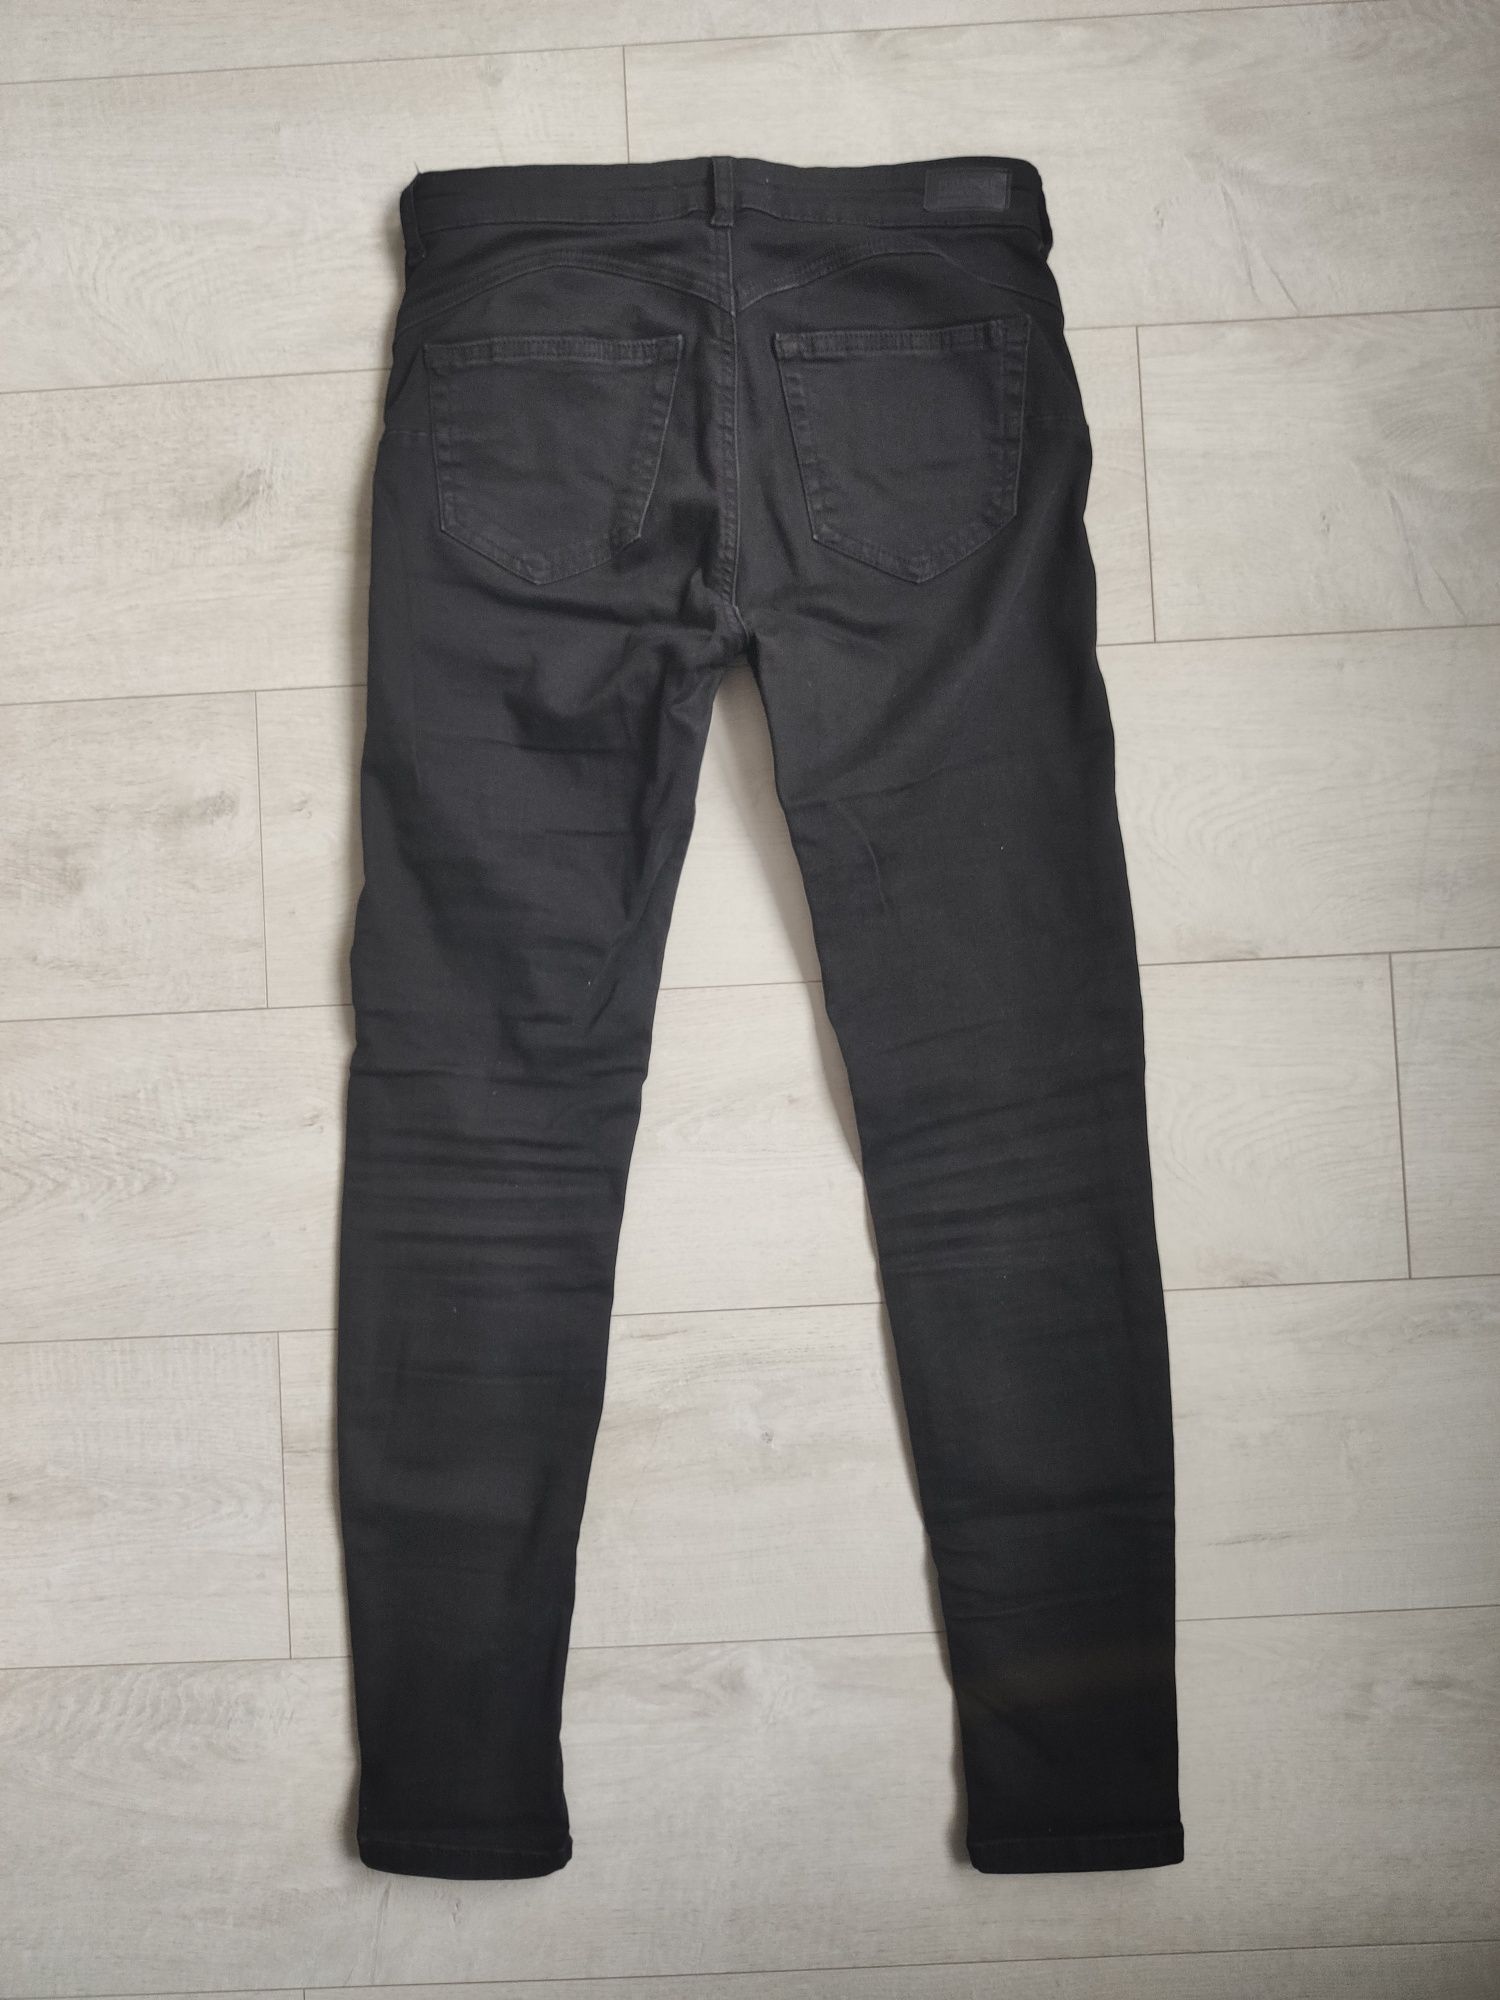 Czarne spodnie Pull&Bear, rozmiar 38, stan bardzo dobry